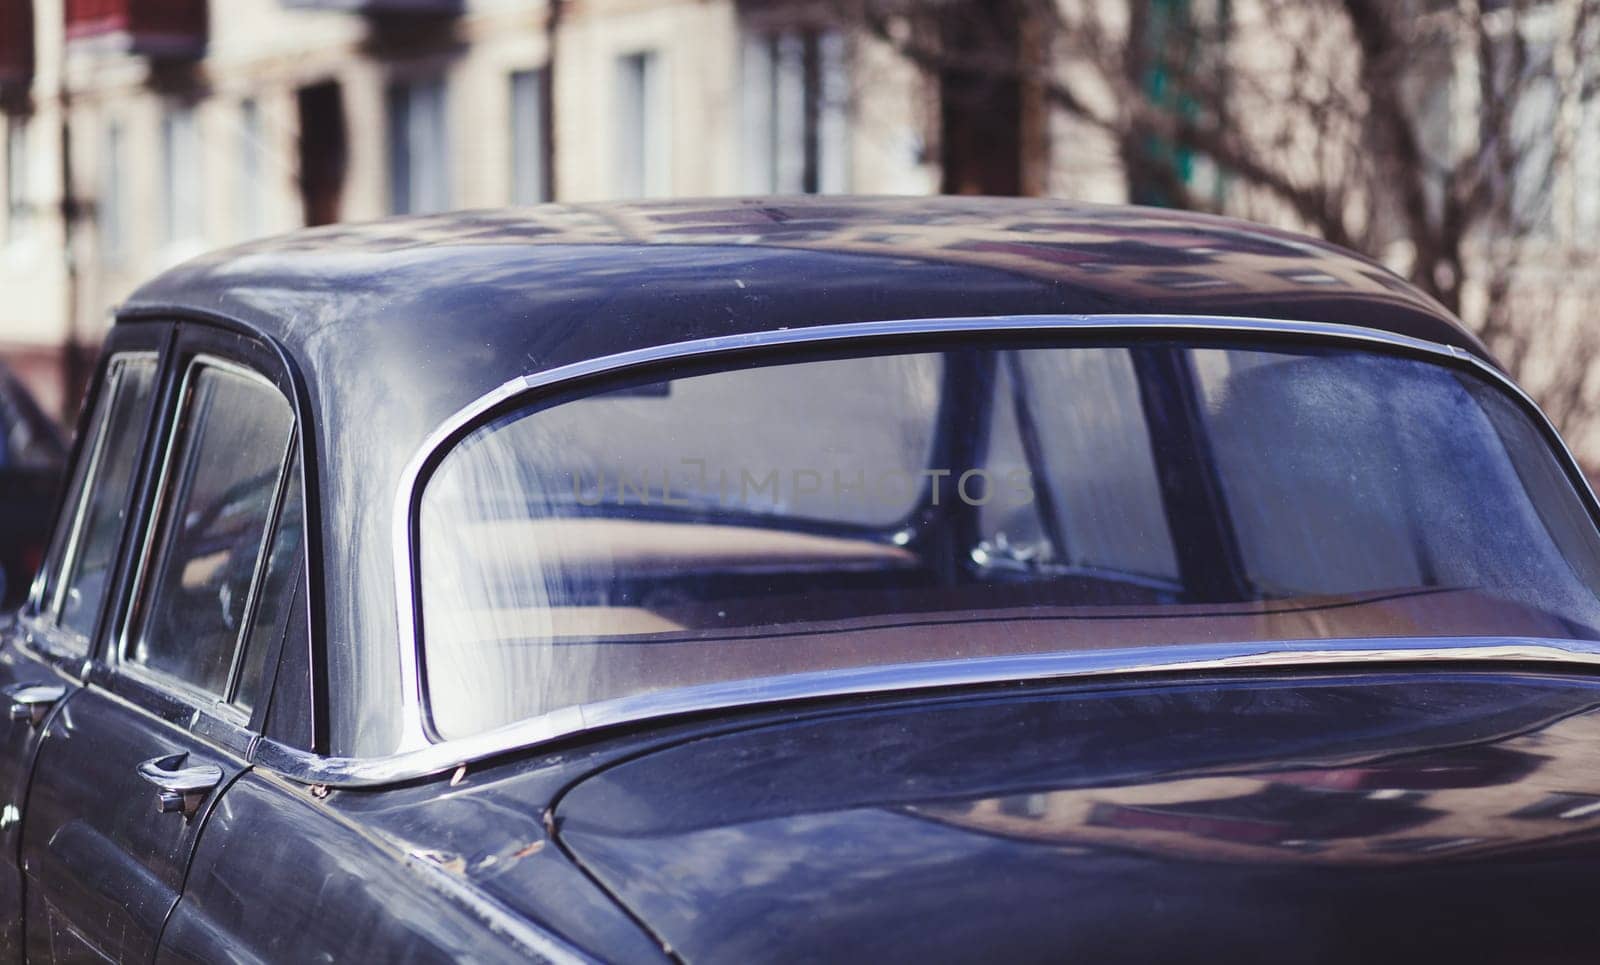 vintage retro car in the city. rear view